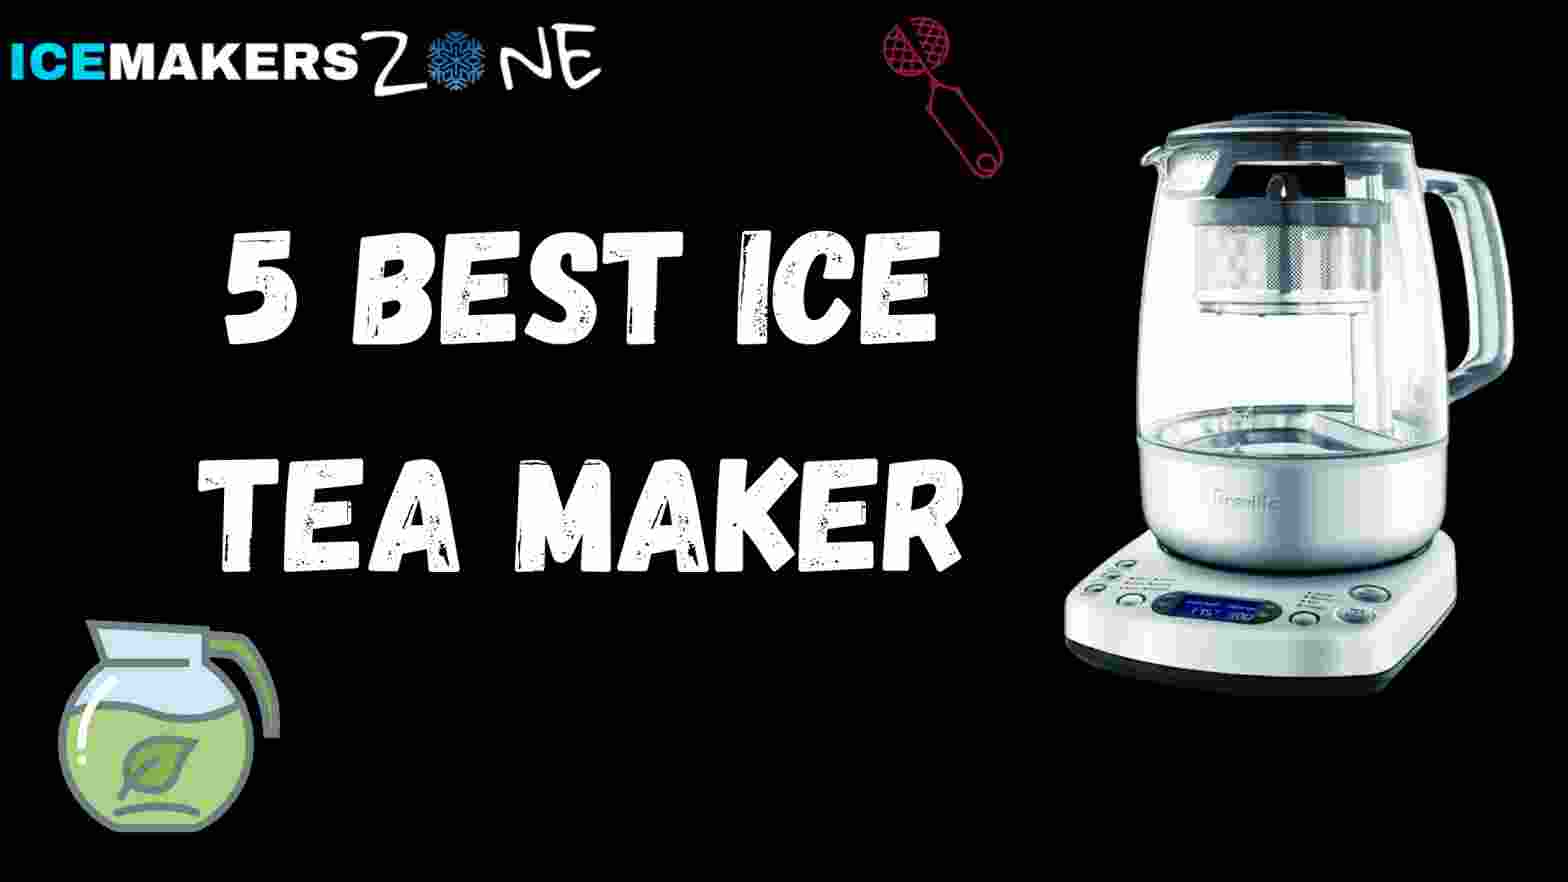 Best ice tea maker